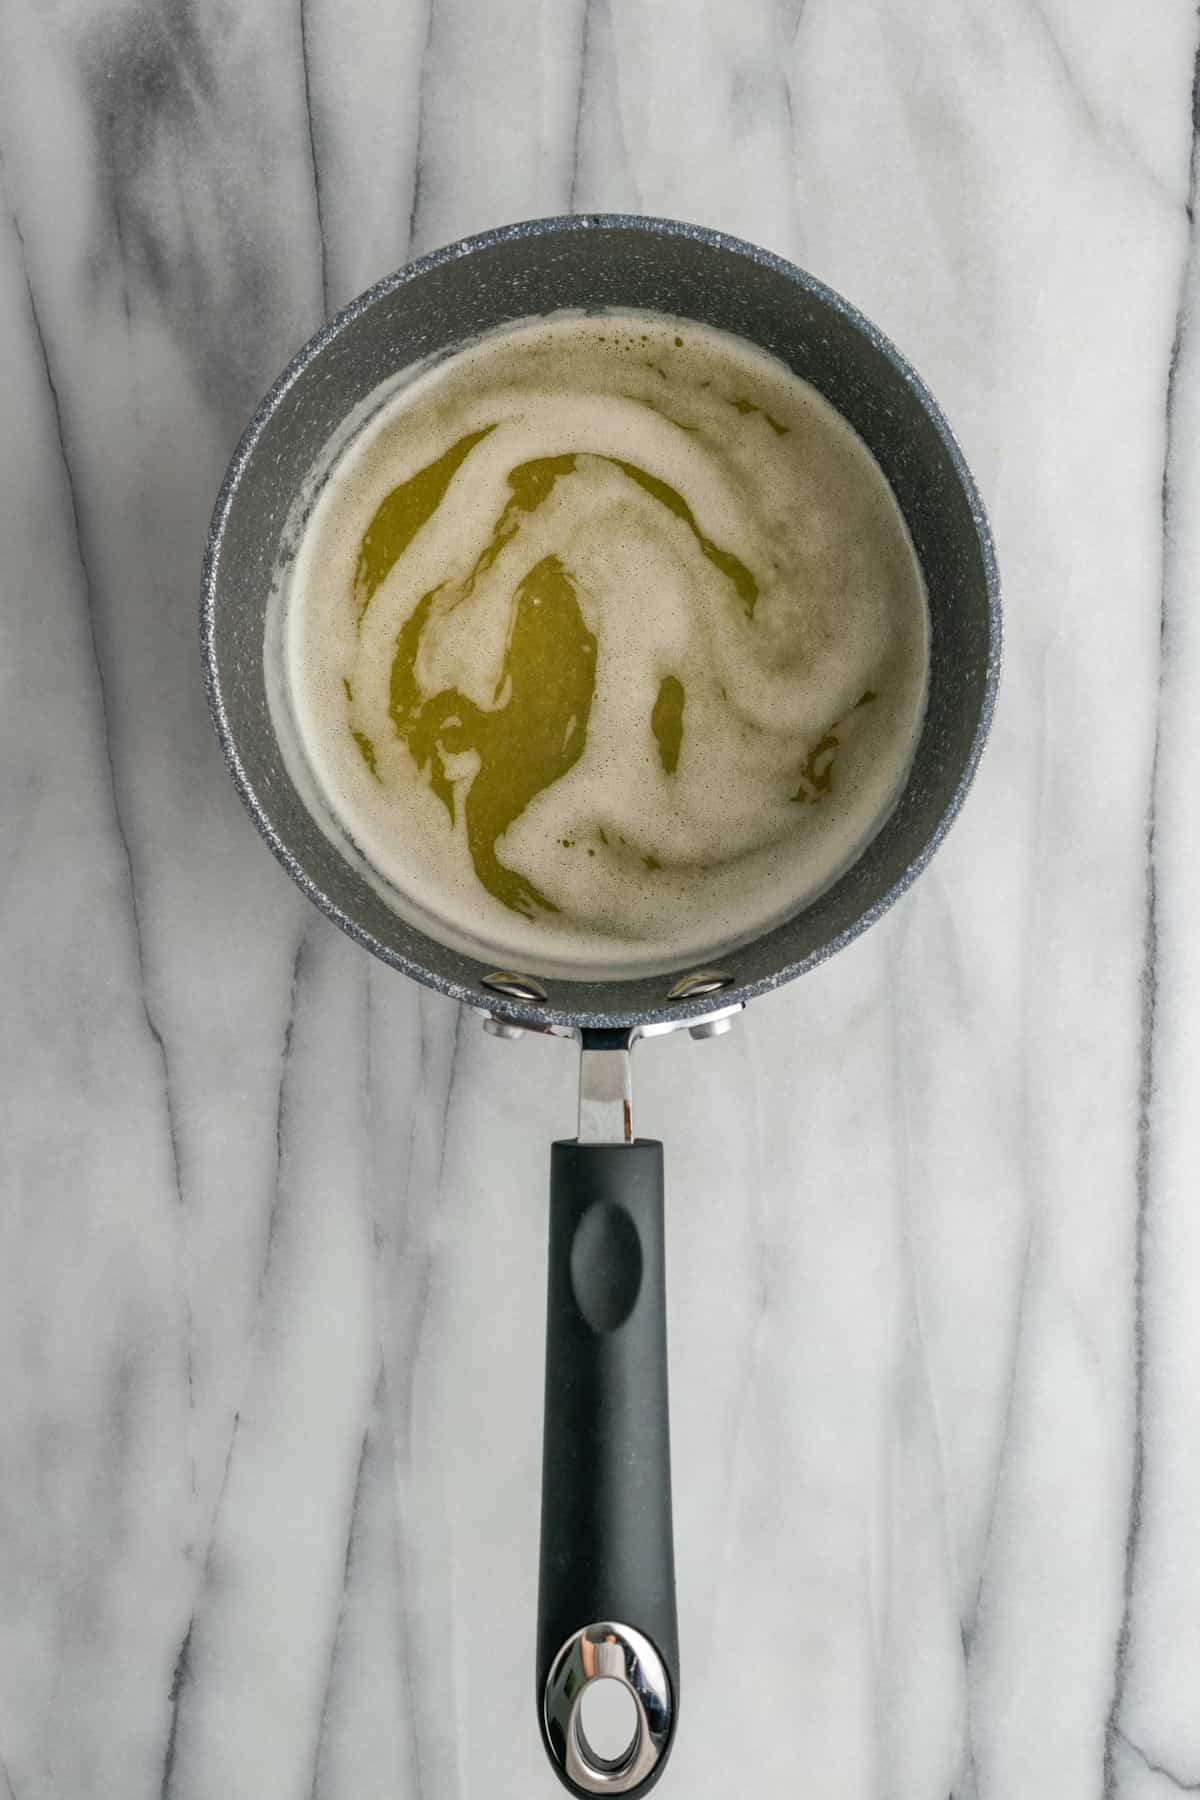 Melted vegan butter in a saucepan